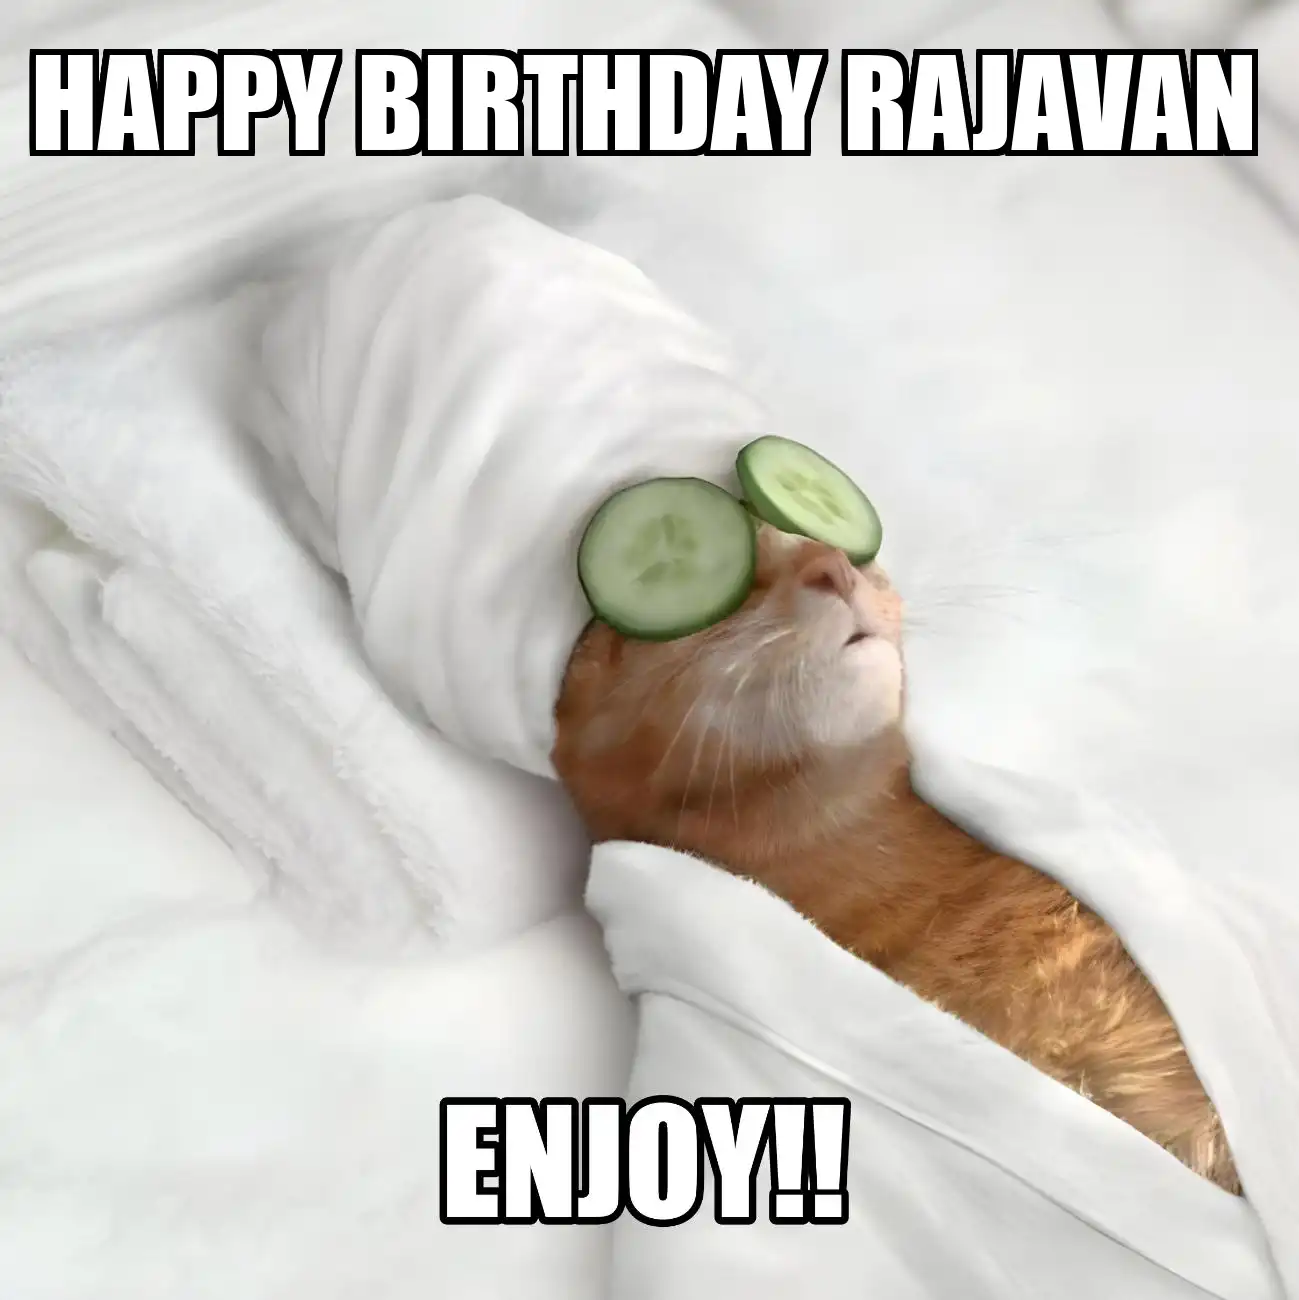 Happy Birthday Rajavan Enjoy Cat Meme